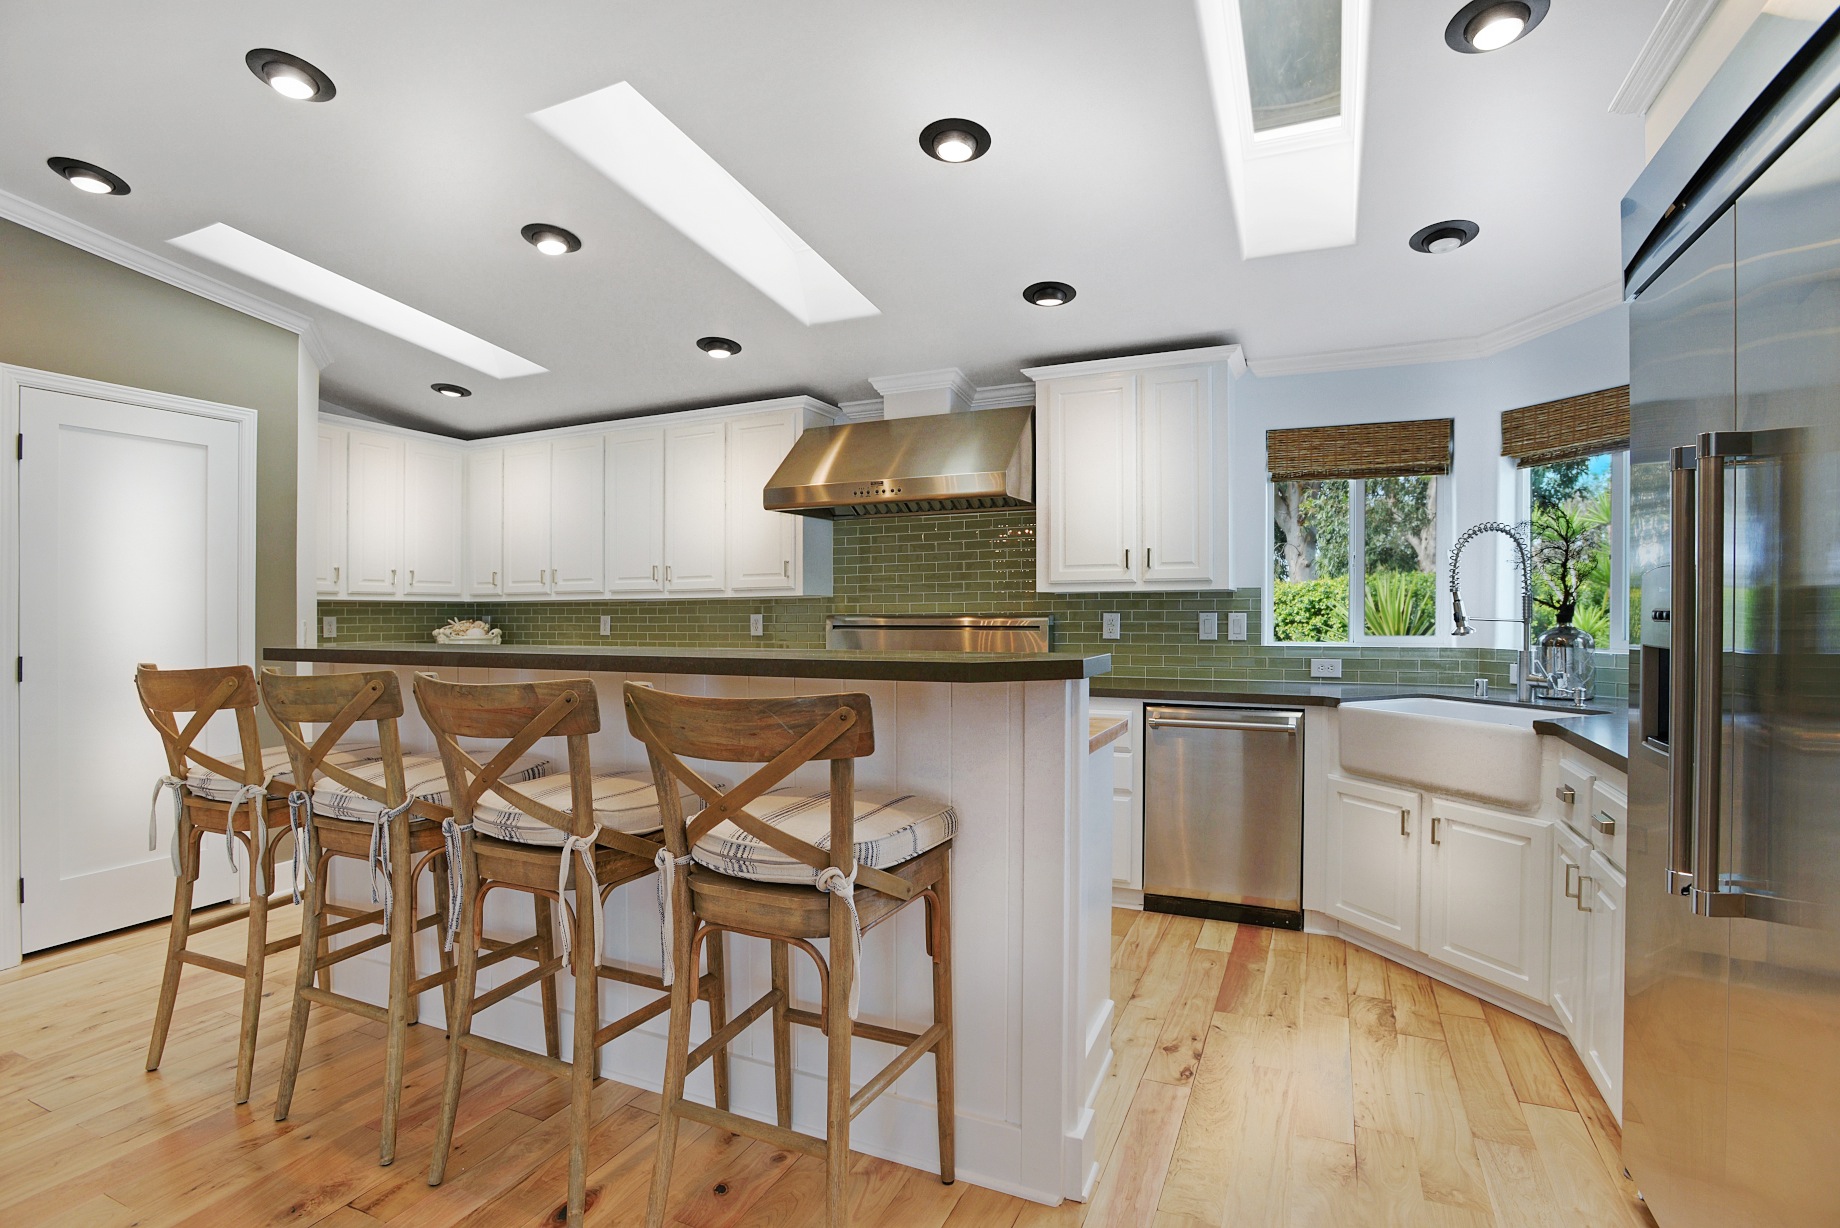 5 Great Manufactured Home Interior Design Tricks - Mobile Home Living